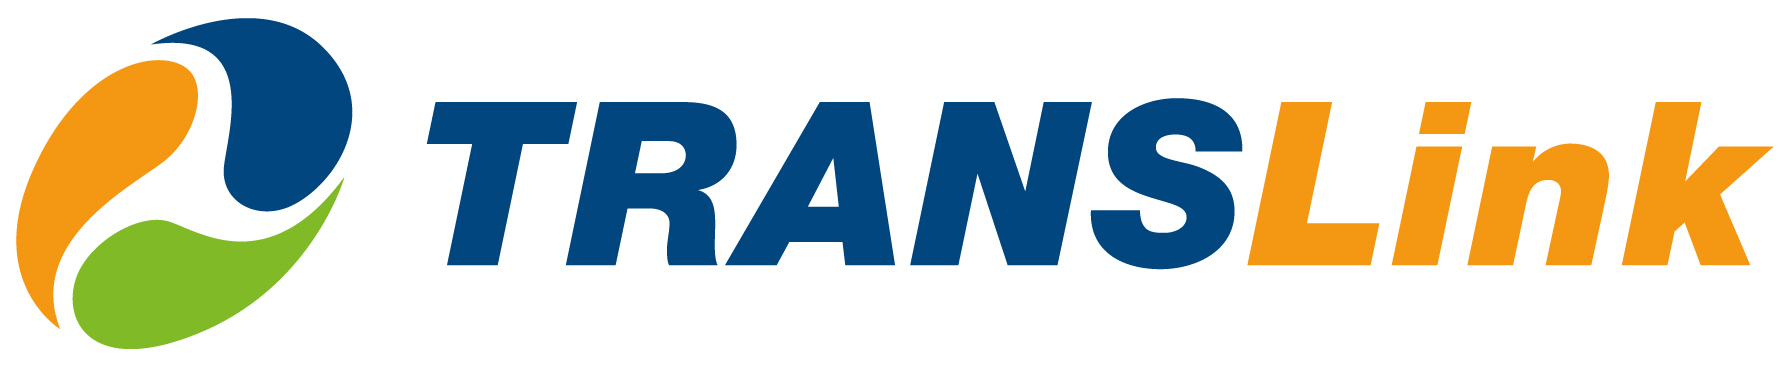 Translink Logo photo - 1